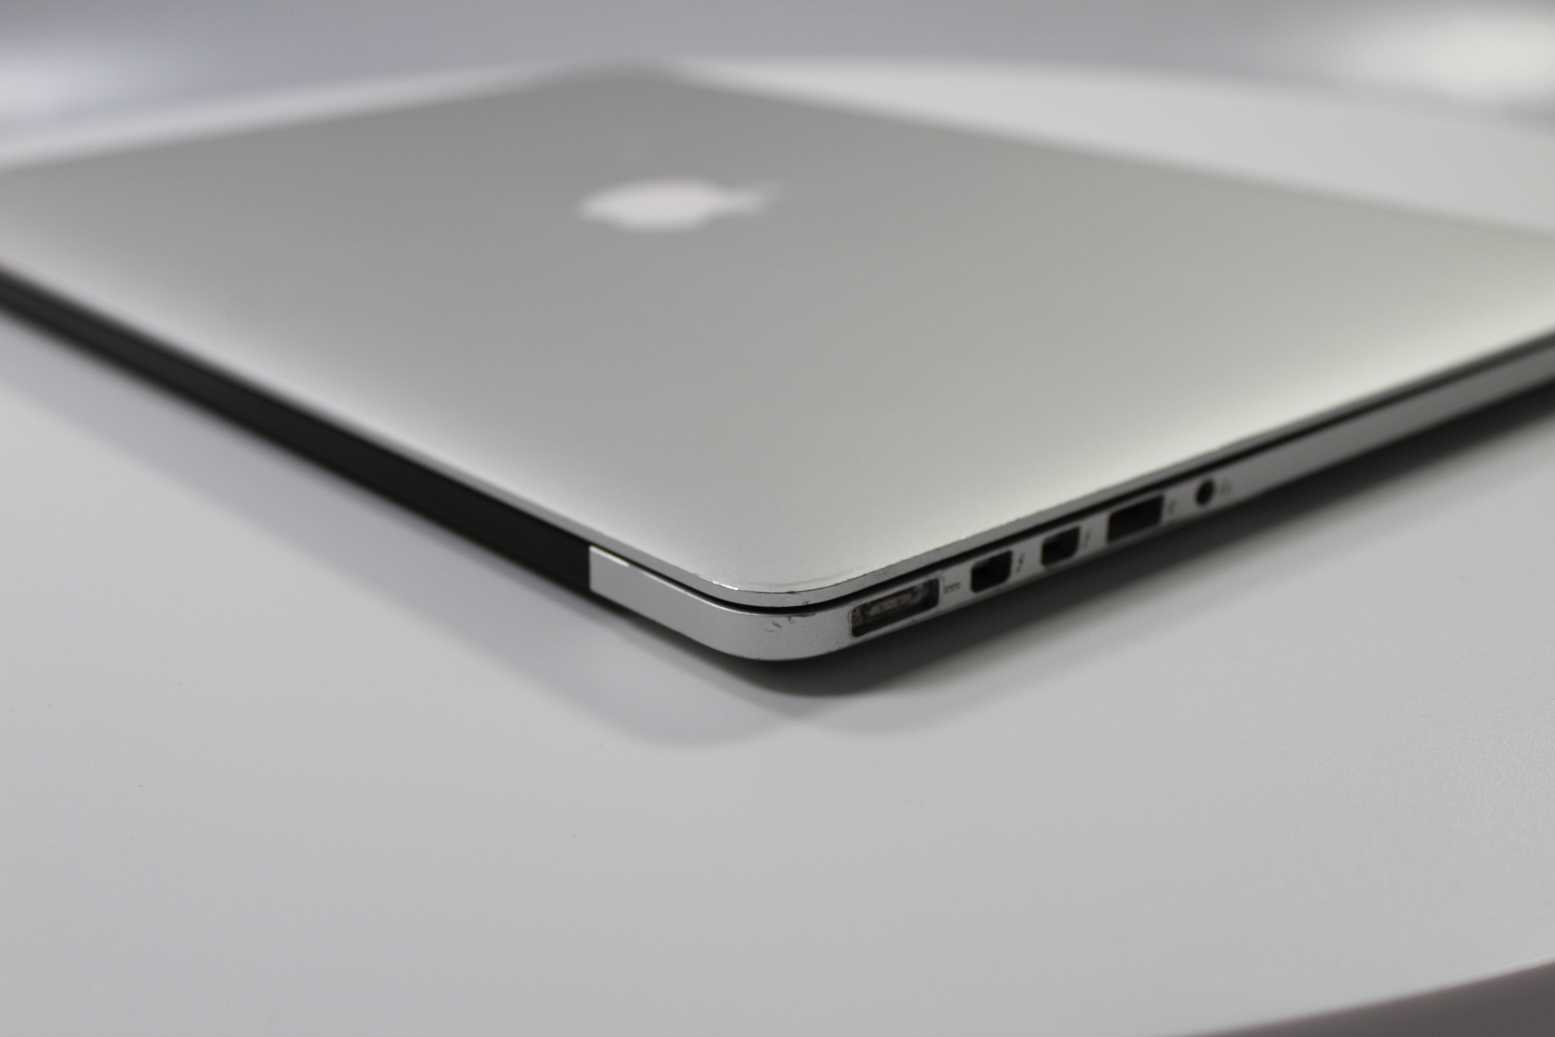 Apple MacBook Pro 15-inch 2014 2.8GHz Core i7 15